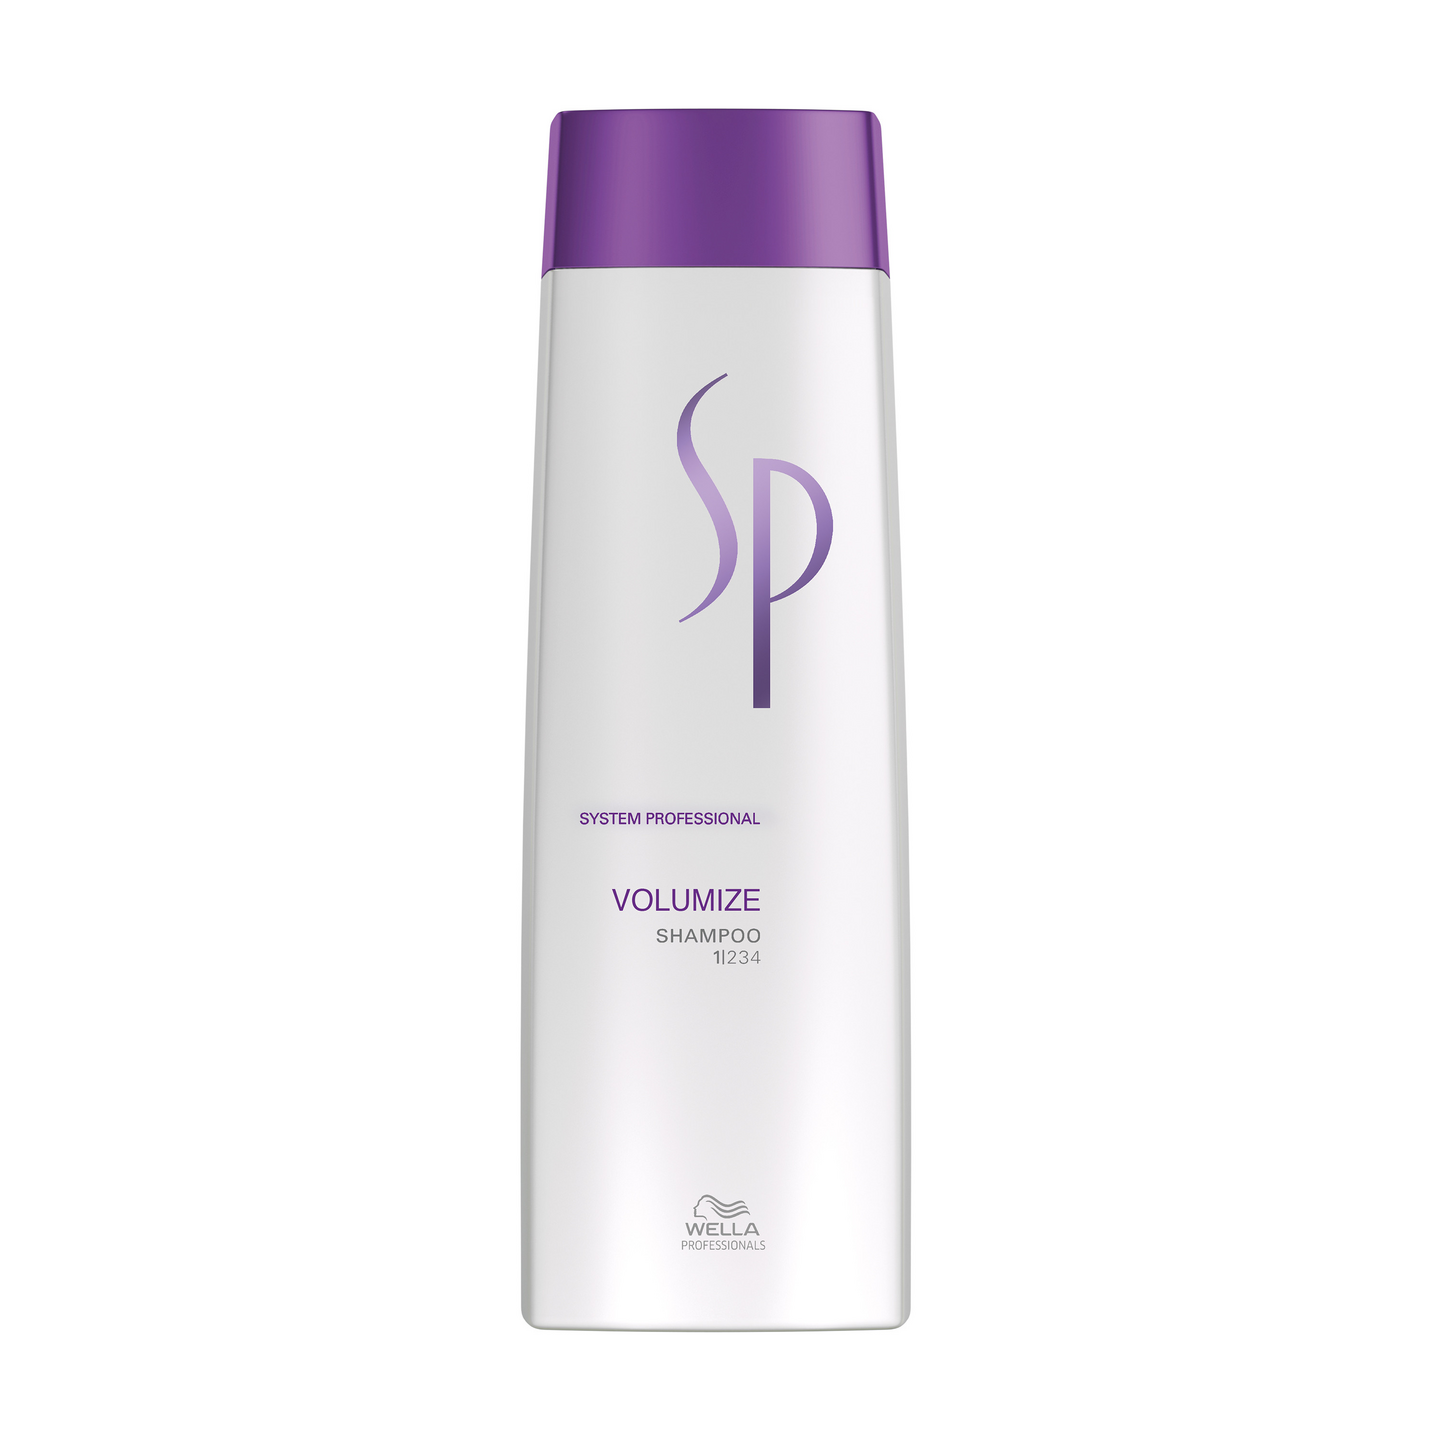 Wella Professionals SP shampoo 250ml Volumize